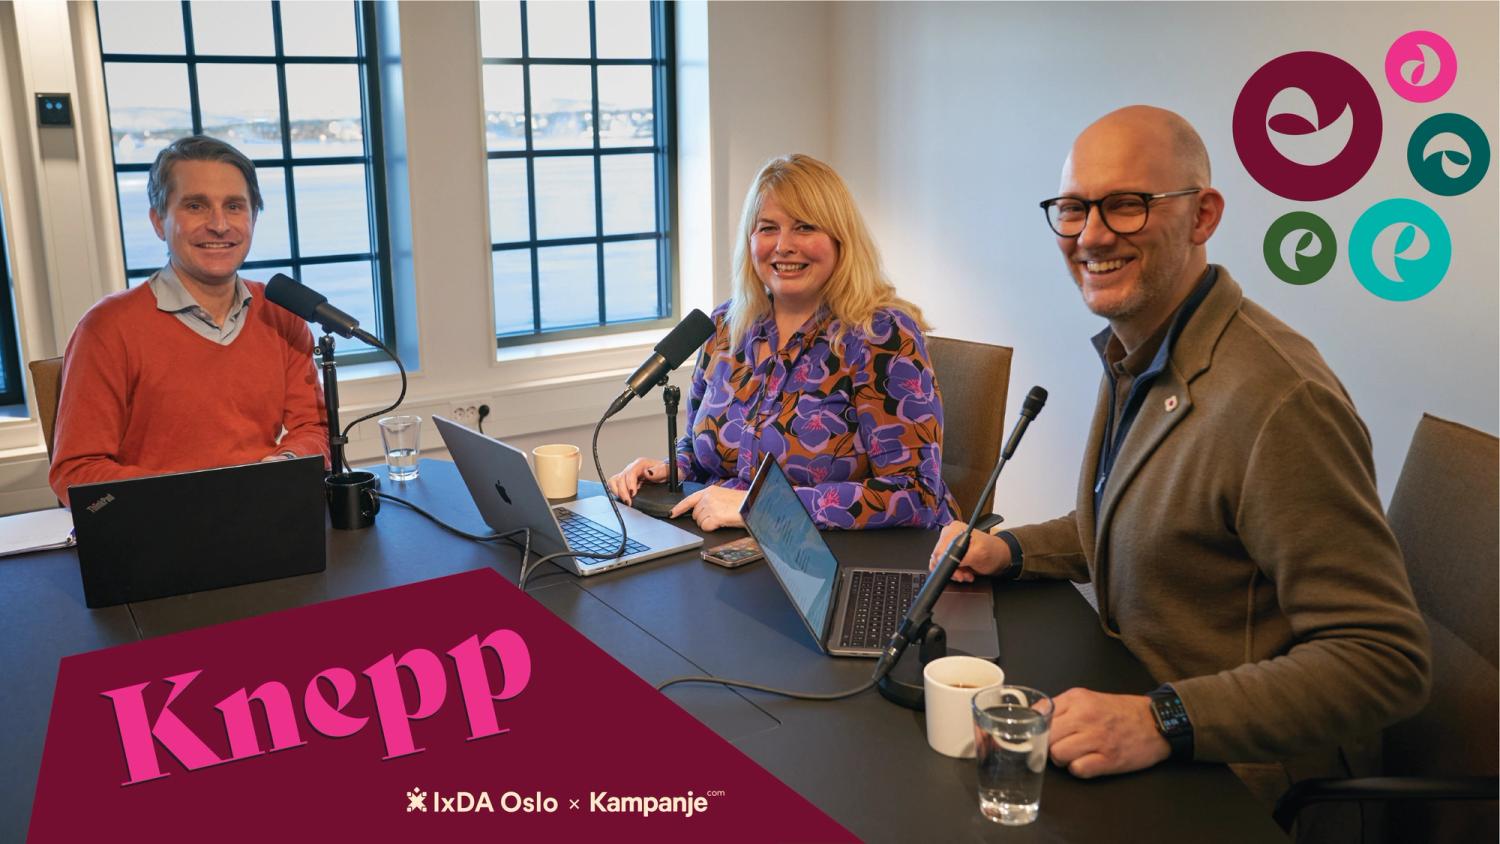 Finn Myrstad, Ann-Kristin Hansen, and Fredrik Matheson at Studio 38 during the recording of Knepp episode 2